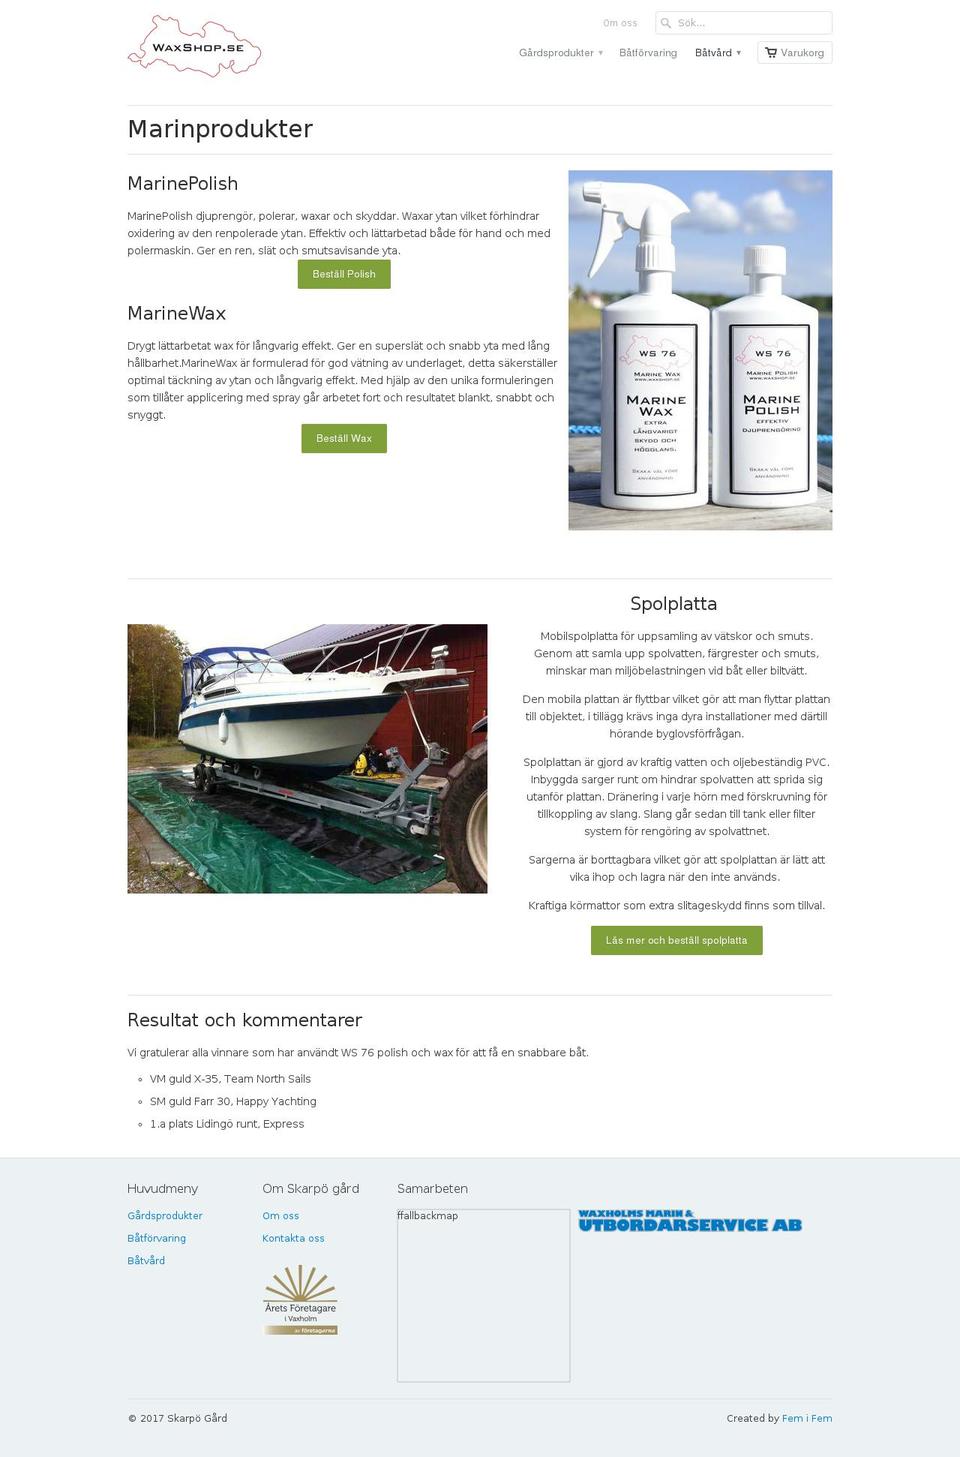 waxshop.se shopify website screenshot